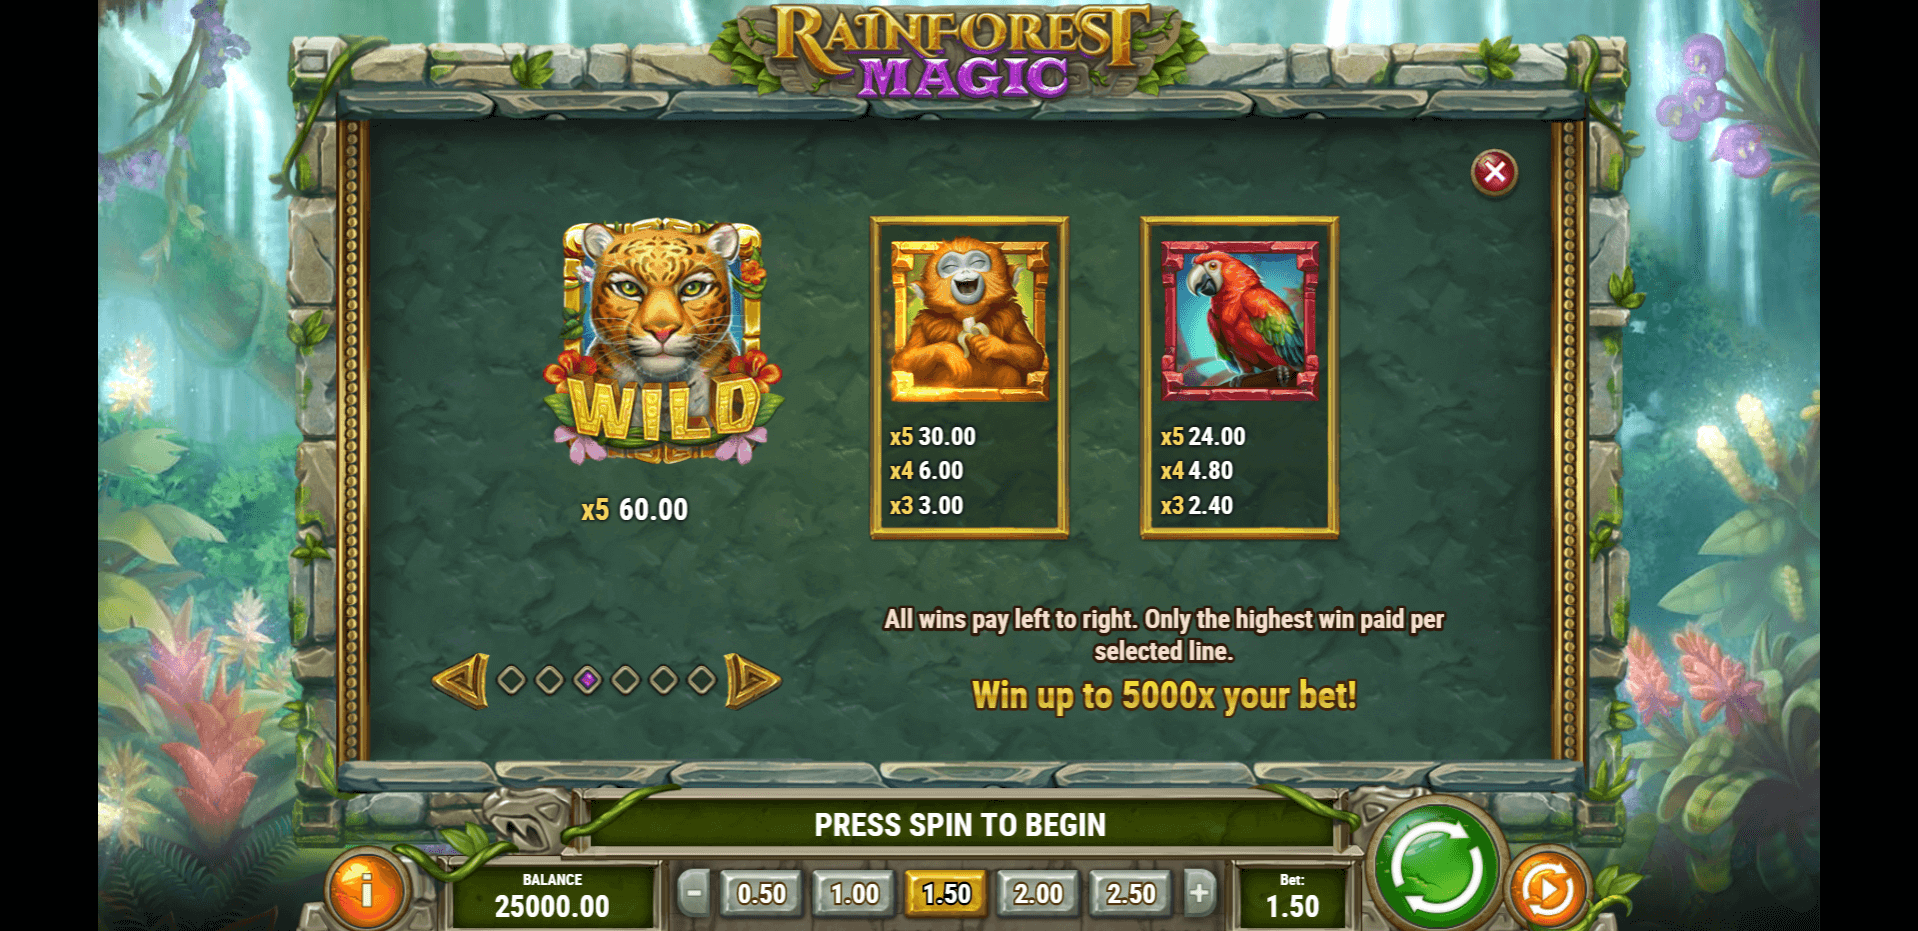 rainforest magic slot machine detail image 2